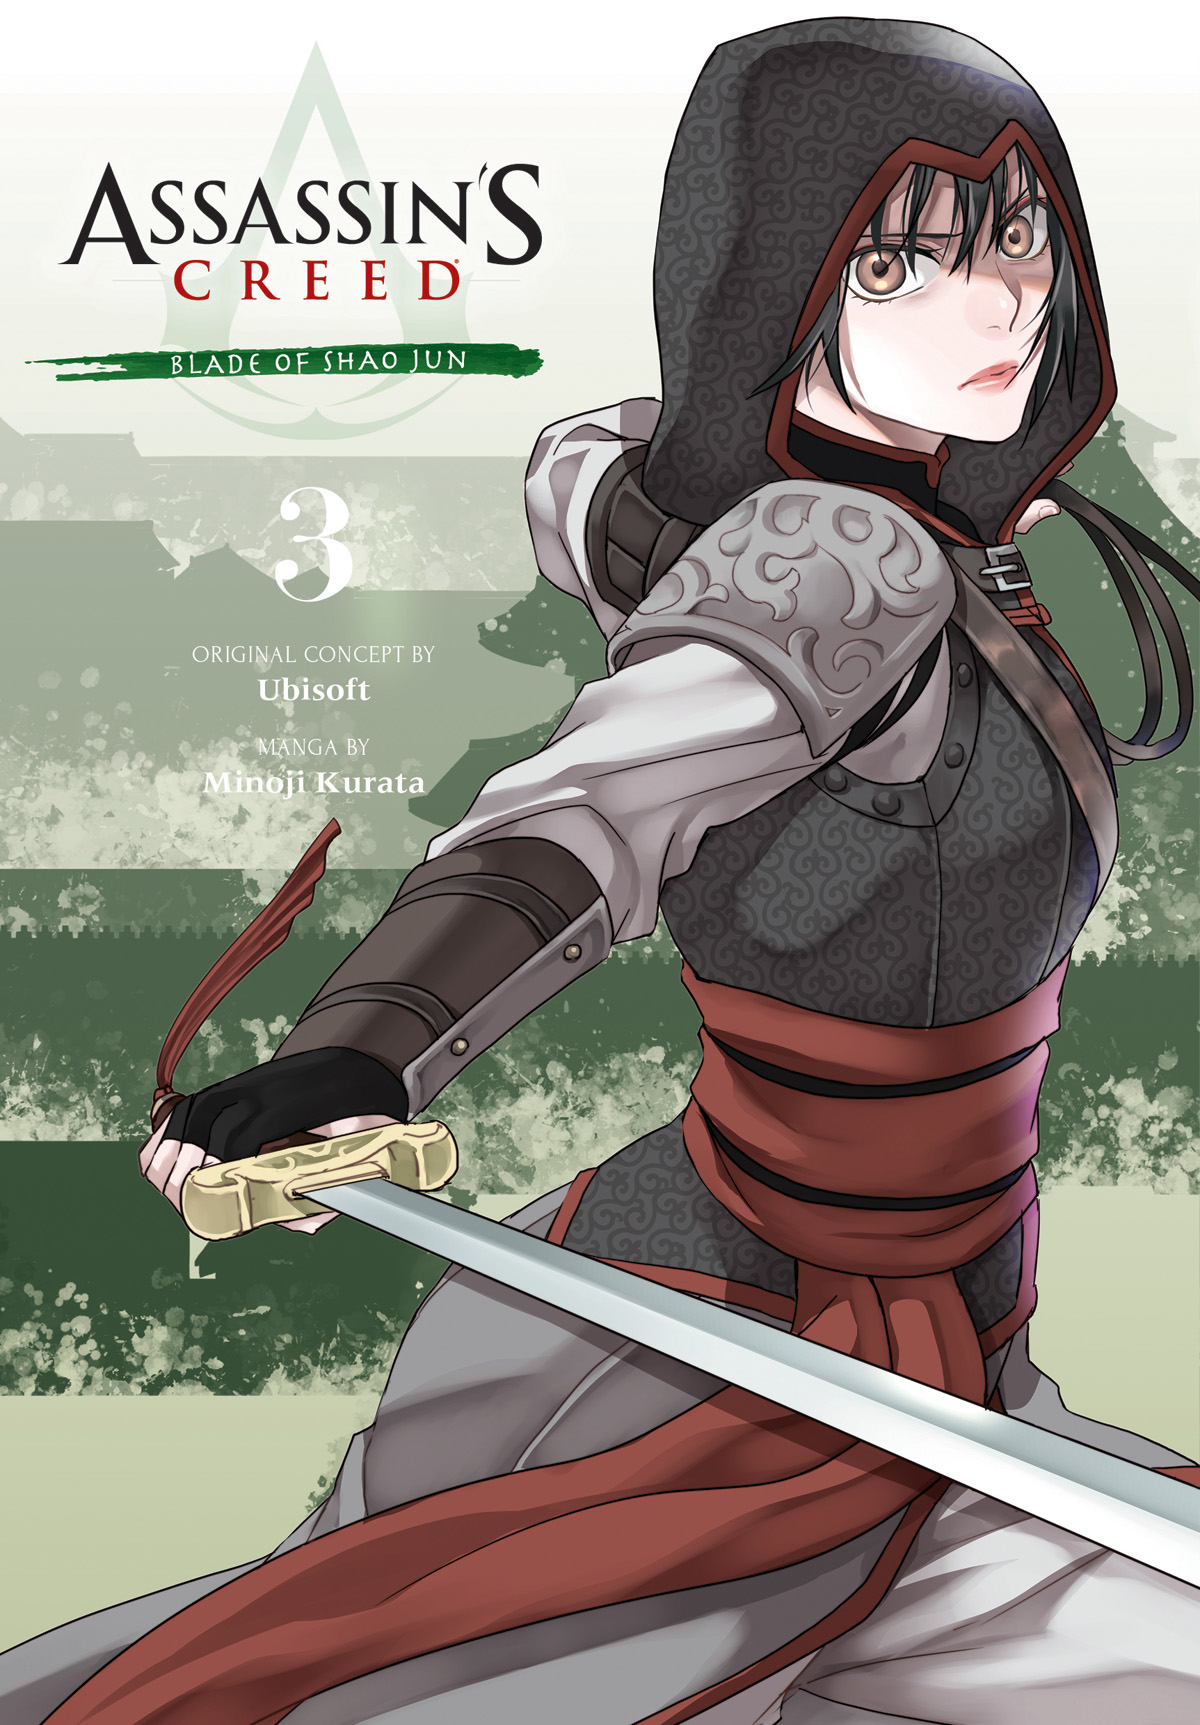 Assassins Creed Blade of Shao Jun Manga Volume 3